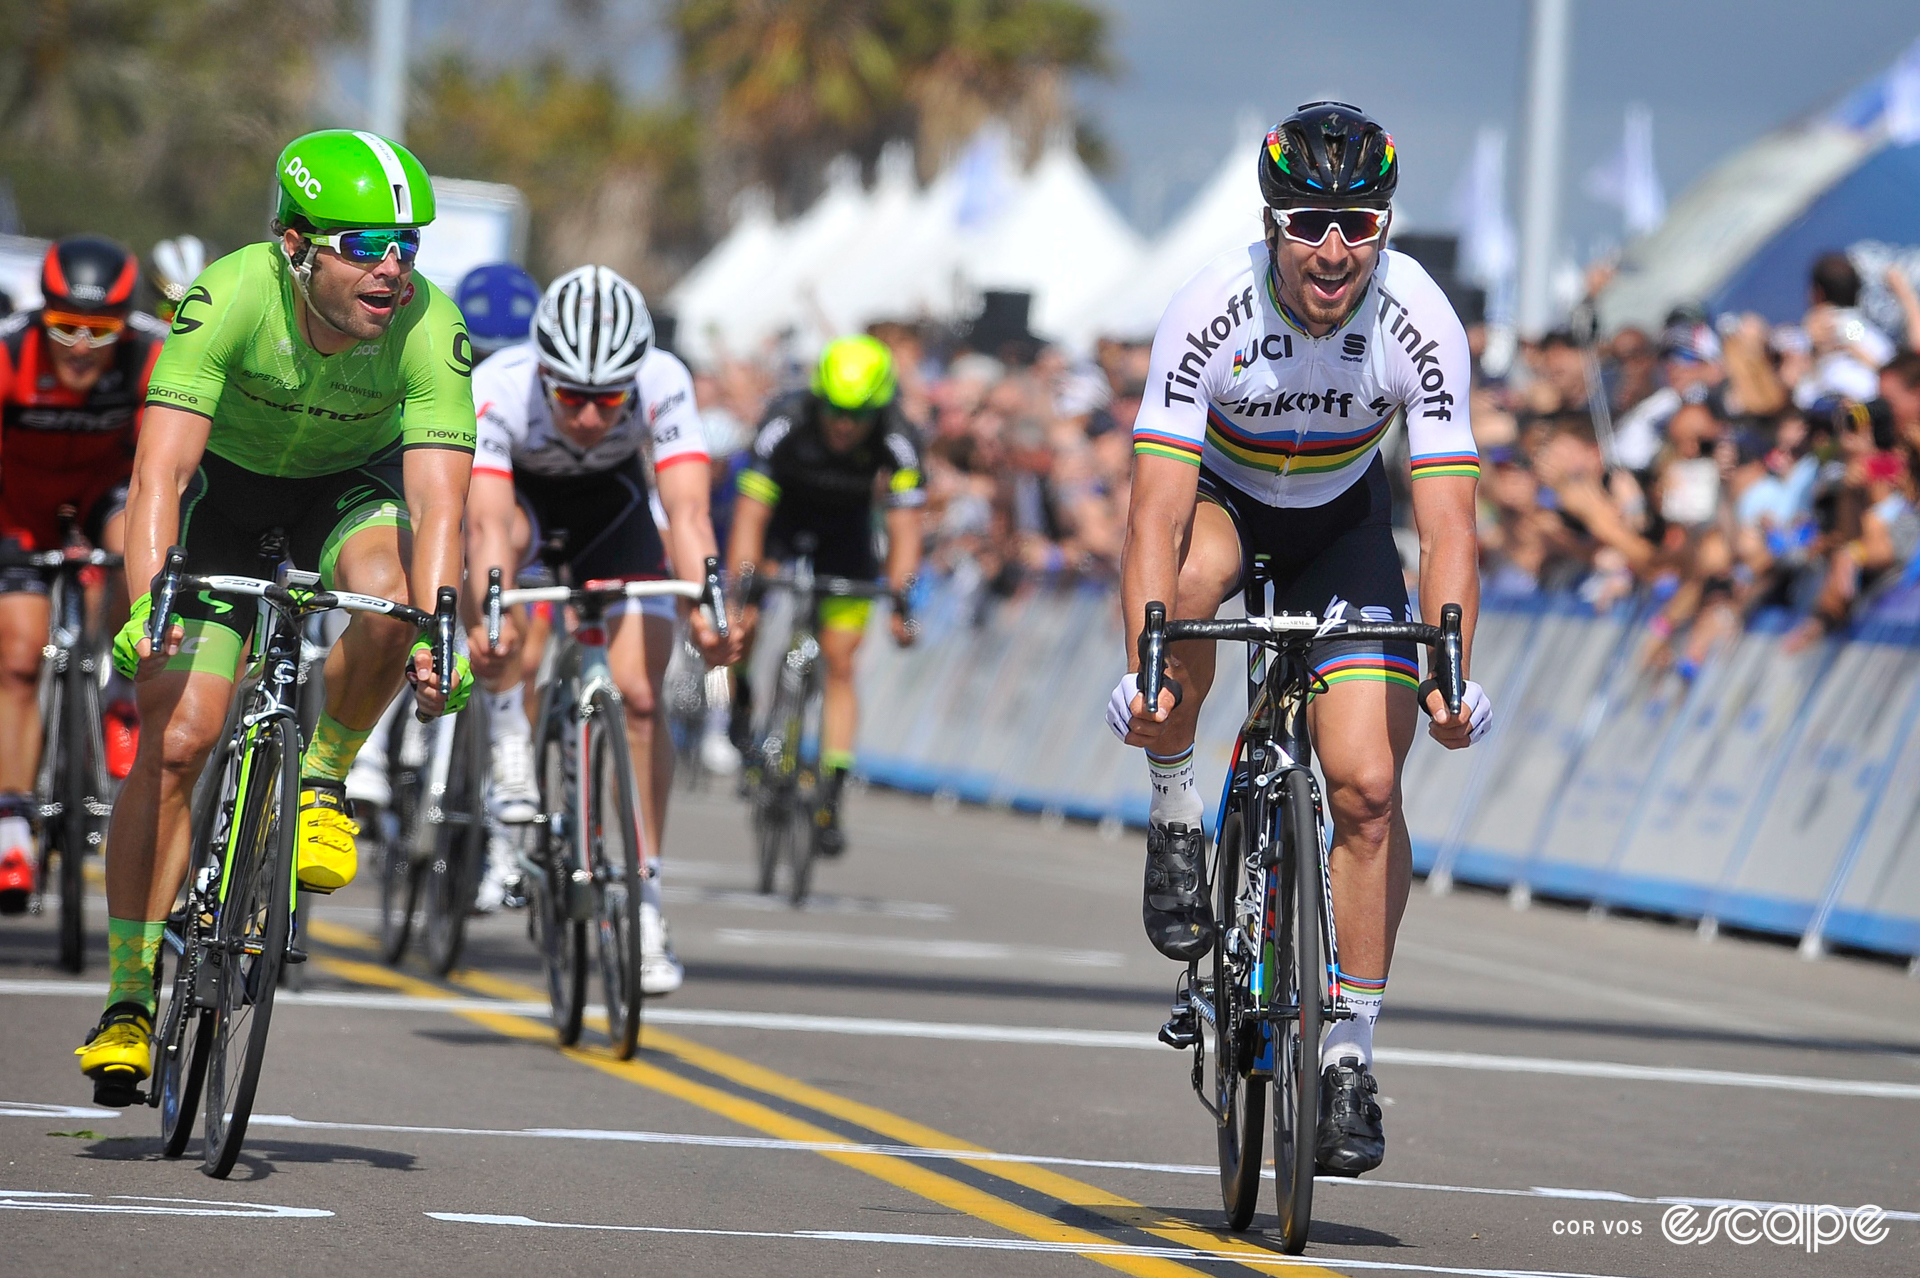 Peter Sagan celebrates winning a stage at the 2016 Tour of California.